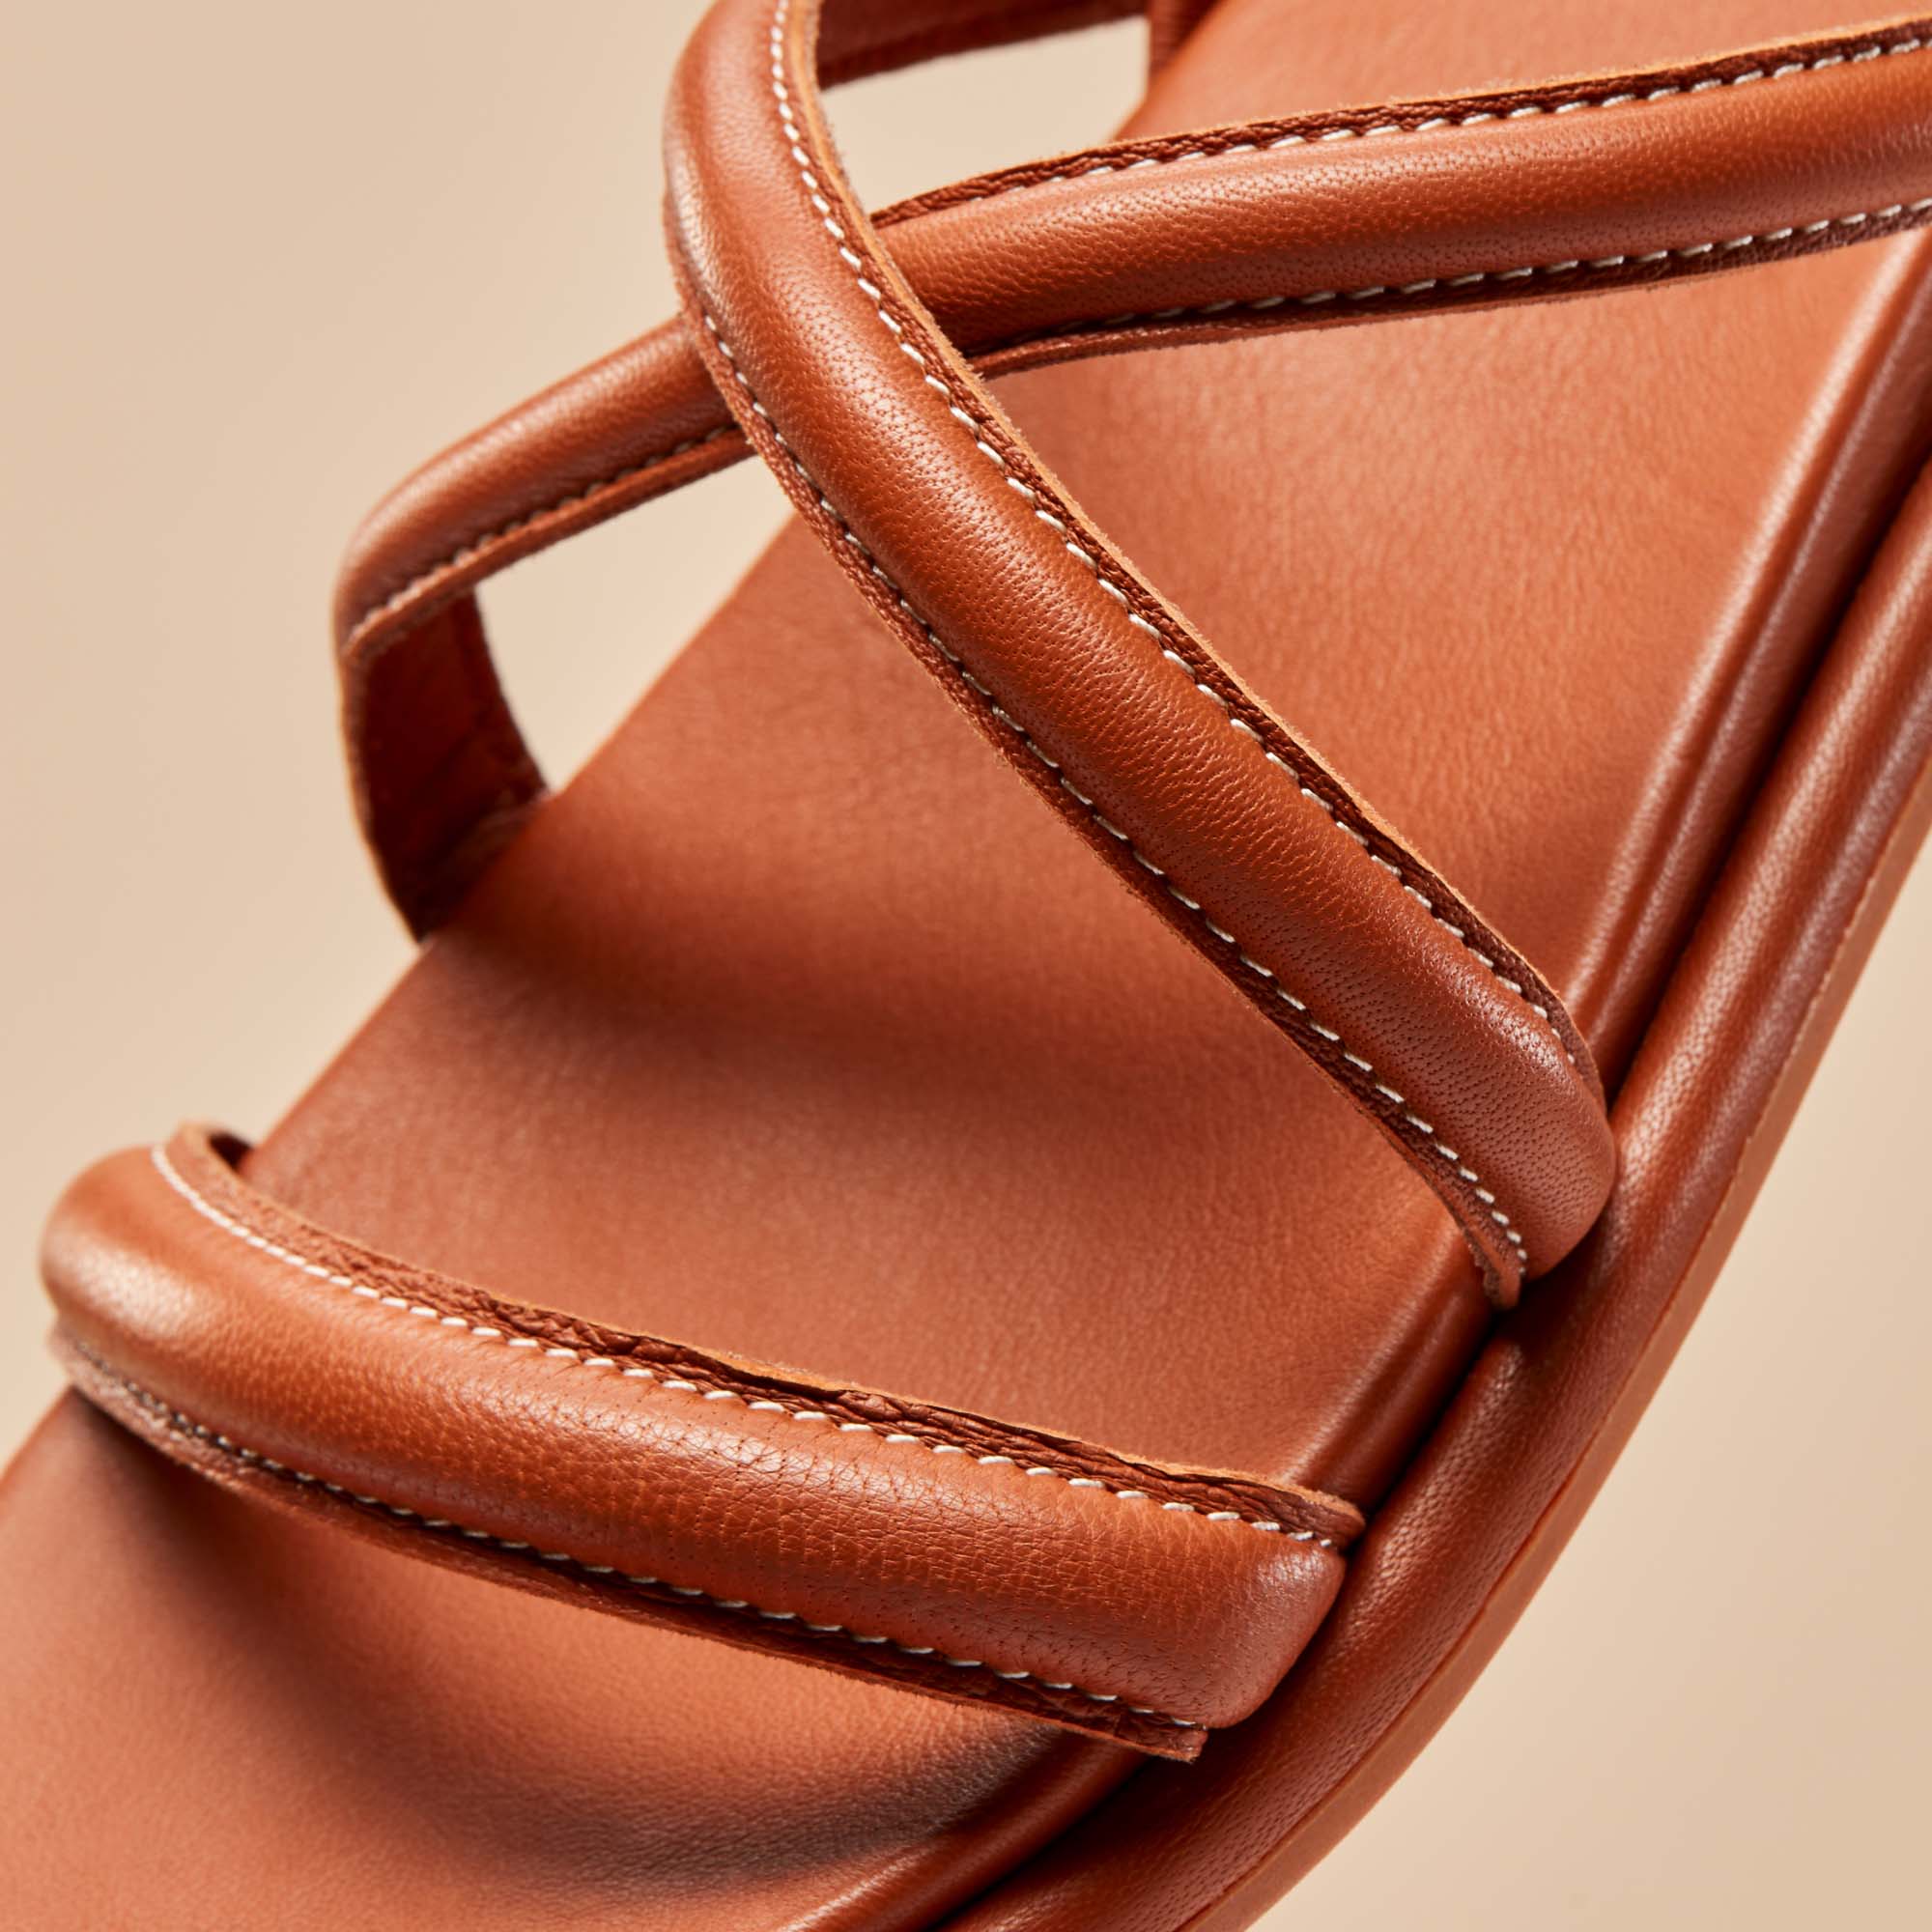 Women's Cognac Manmade Keetton Flat Sandal with Faux Leather Straps